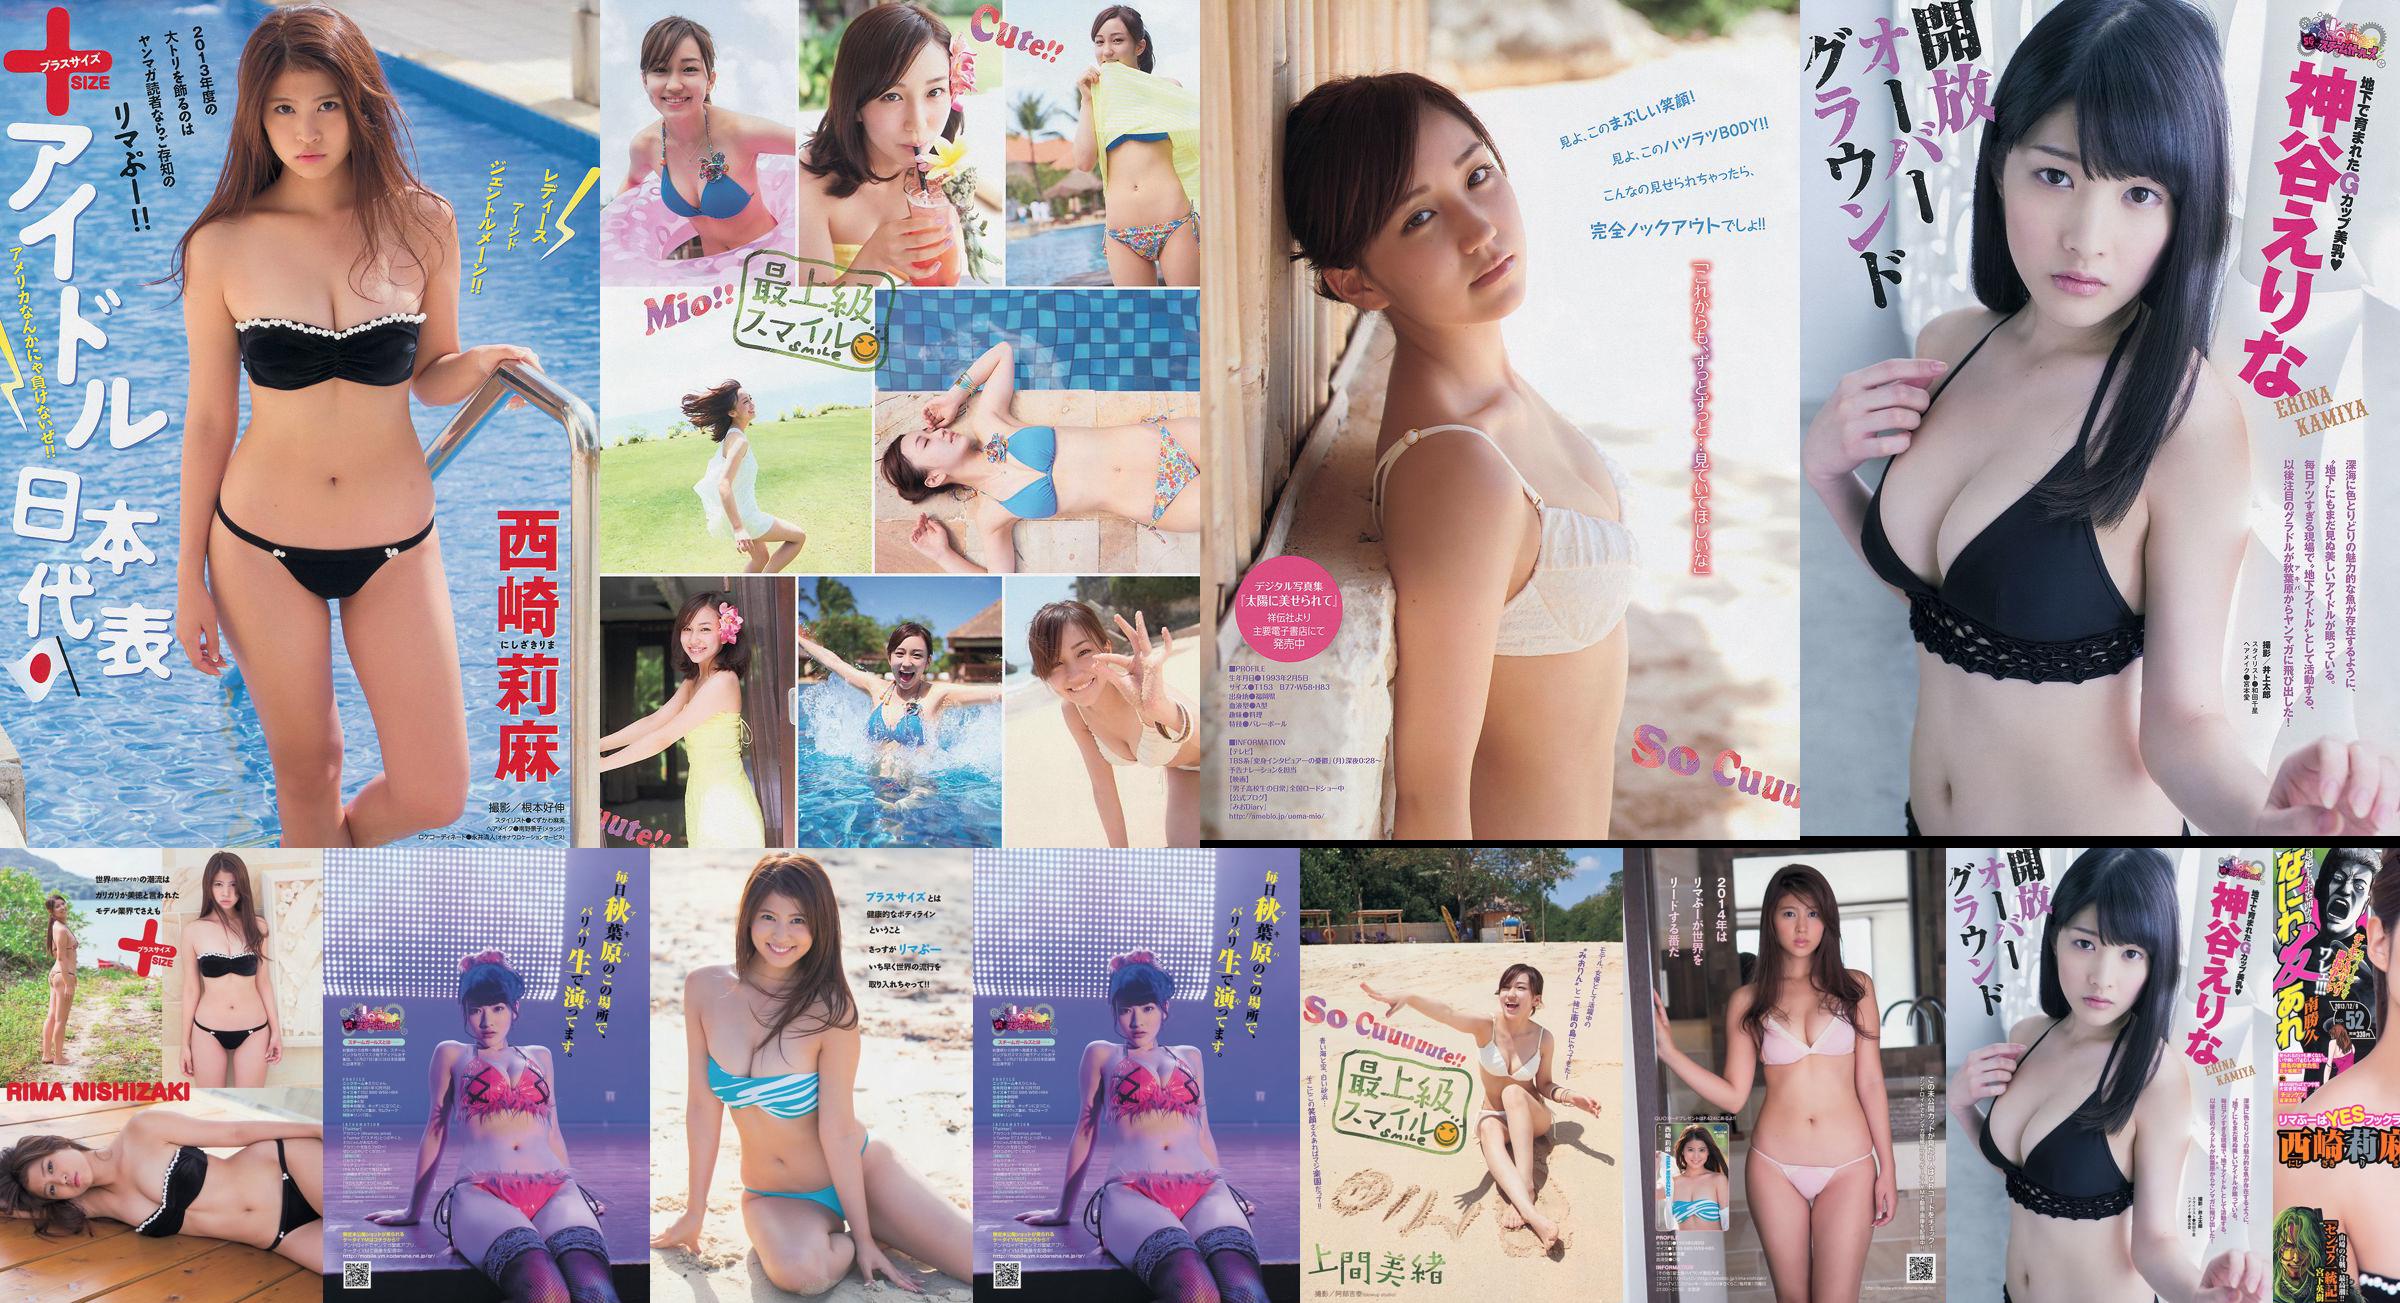 [Young Magazine] Rima Nishizaki Mio Uema Erina Kamiya 2013 No.52 Photo Moshi No.f60369 Pagina 1